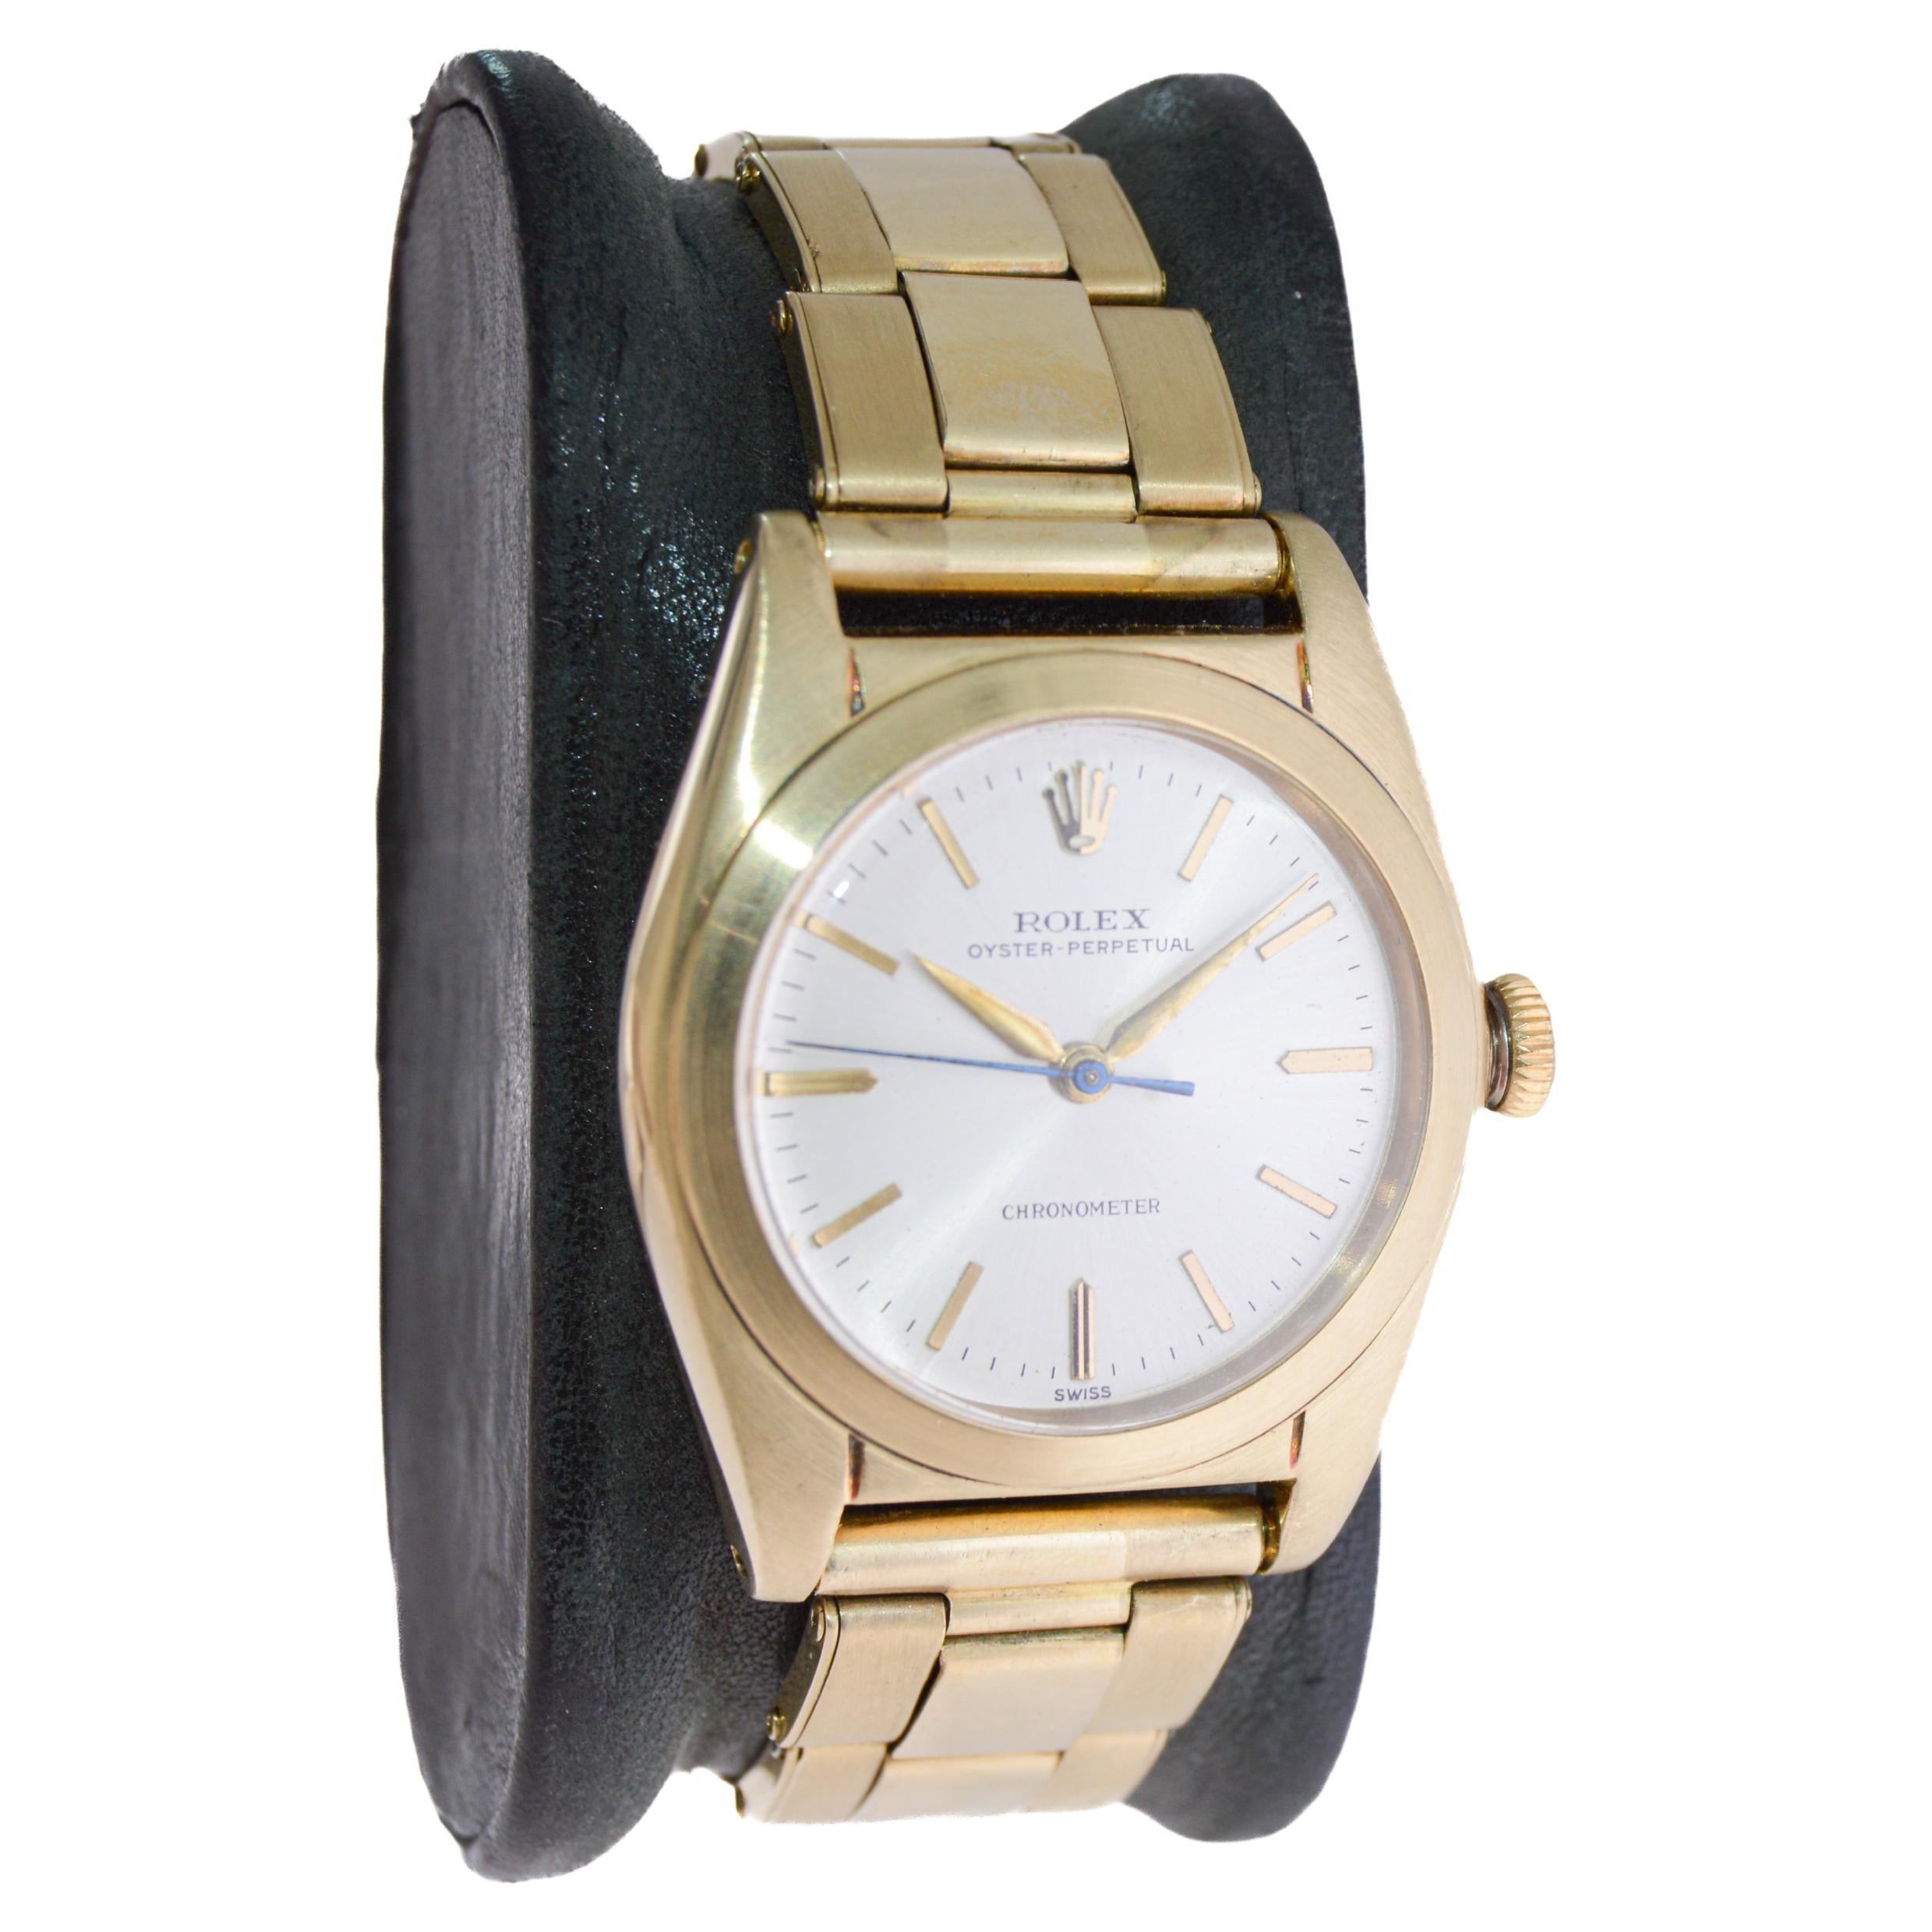 FABRIK / HAUS: Rolex Watch Company
STIL / REFERENZ: Oyster Perpetual 